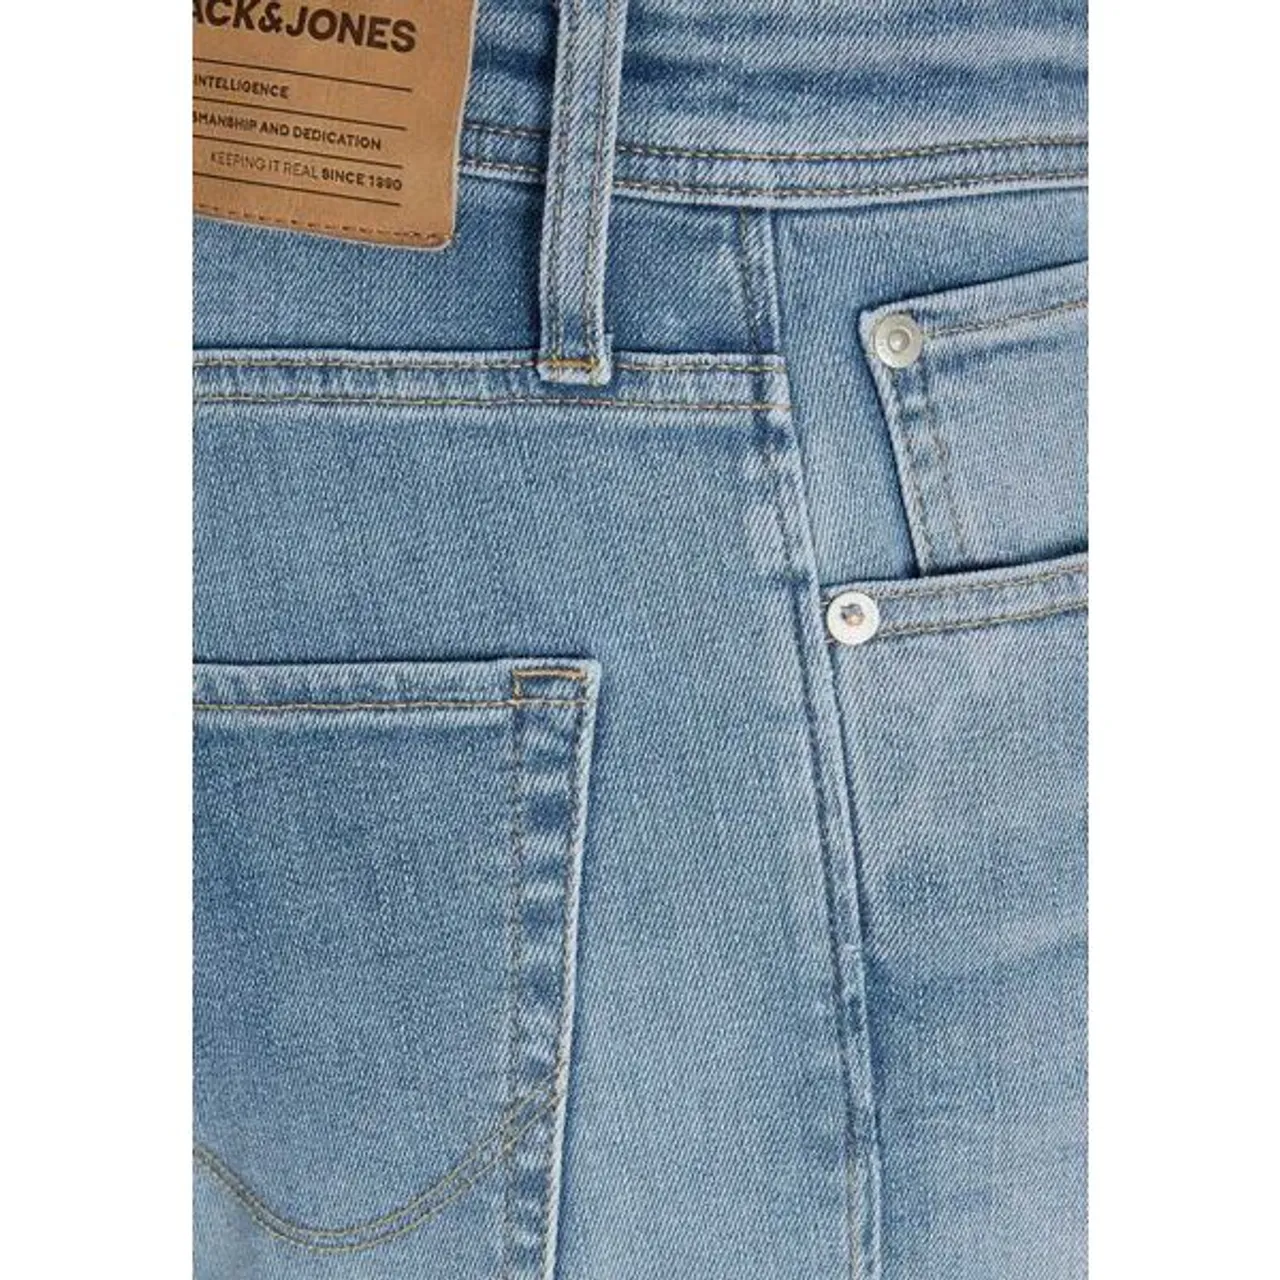 Comfort-fit-Jeans JACK & JONES "MIKE ORIGINAL" Gr. 32, Länge 34, blau (blue) Herren Jeans Comfort Fit